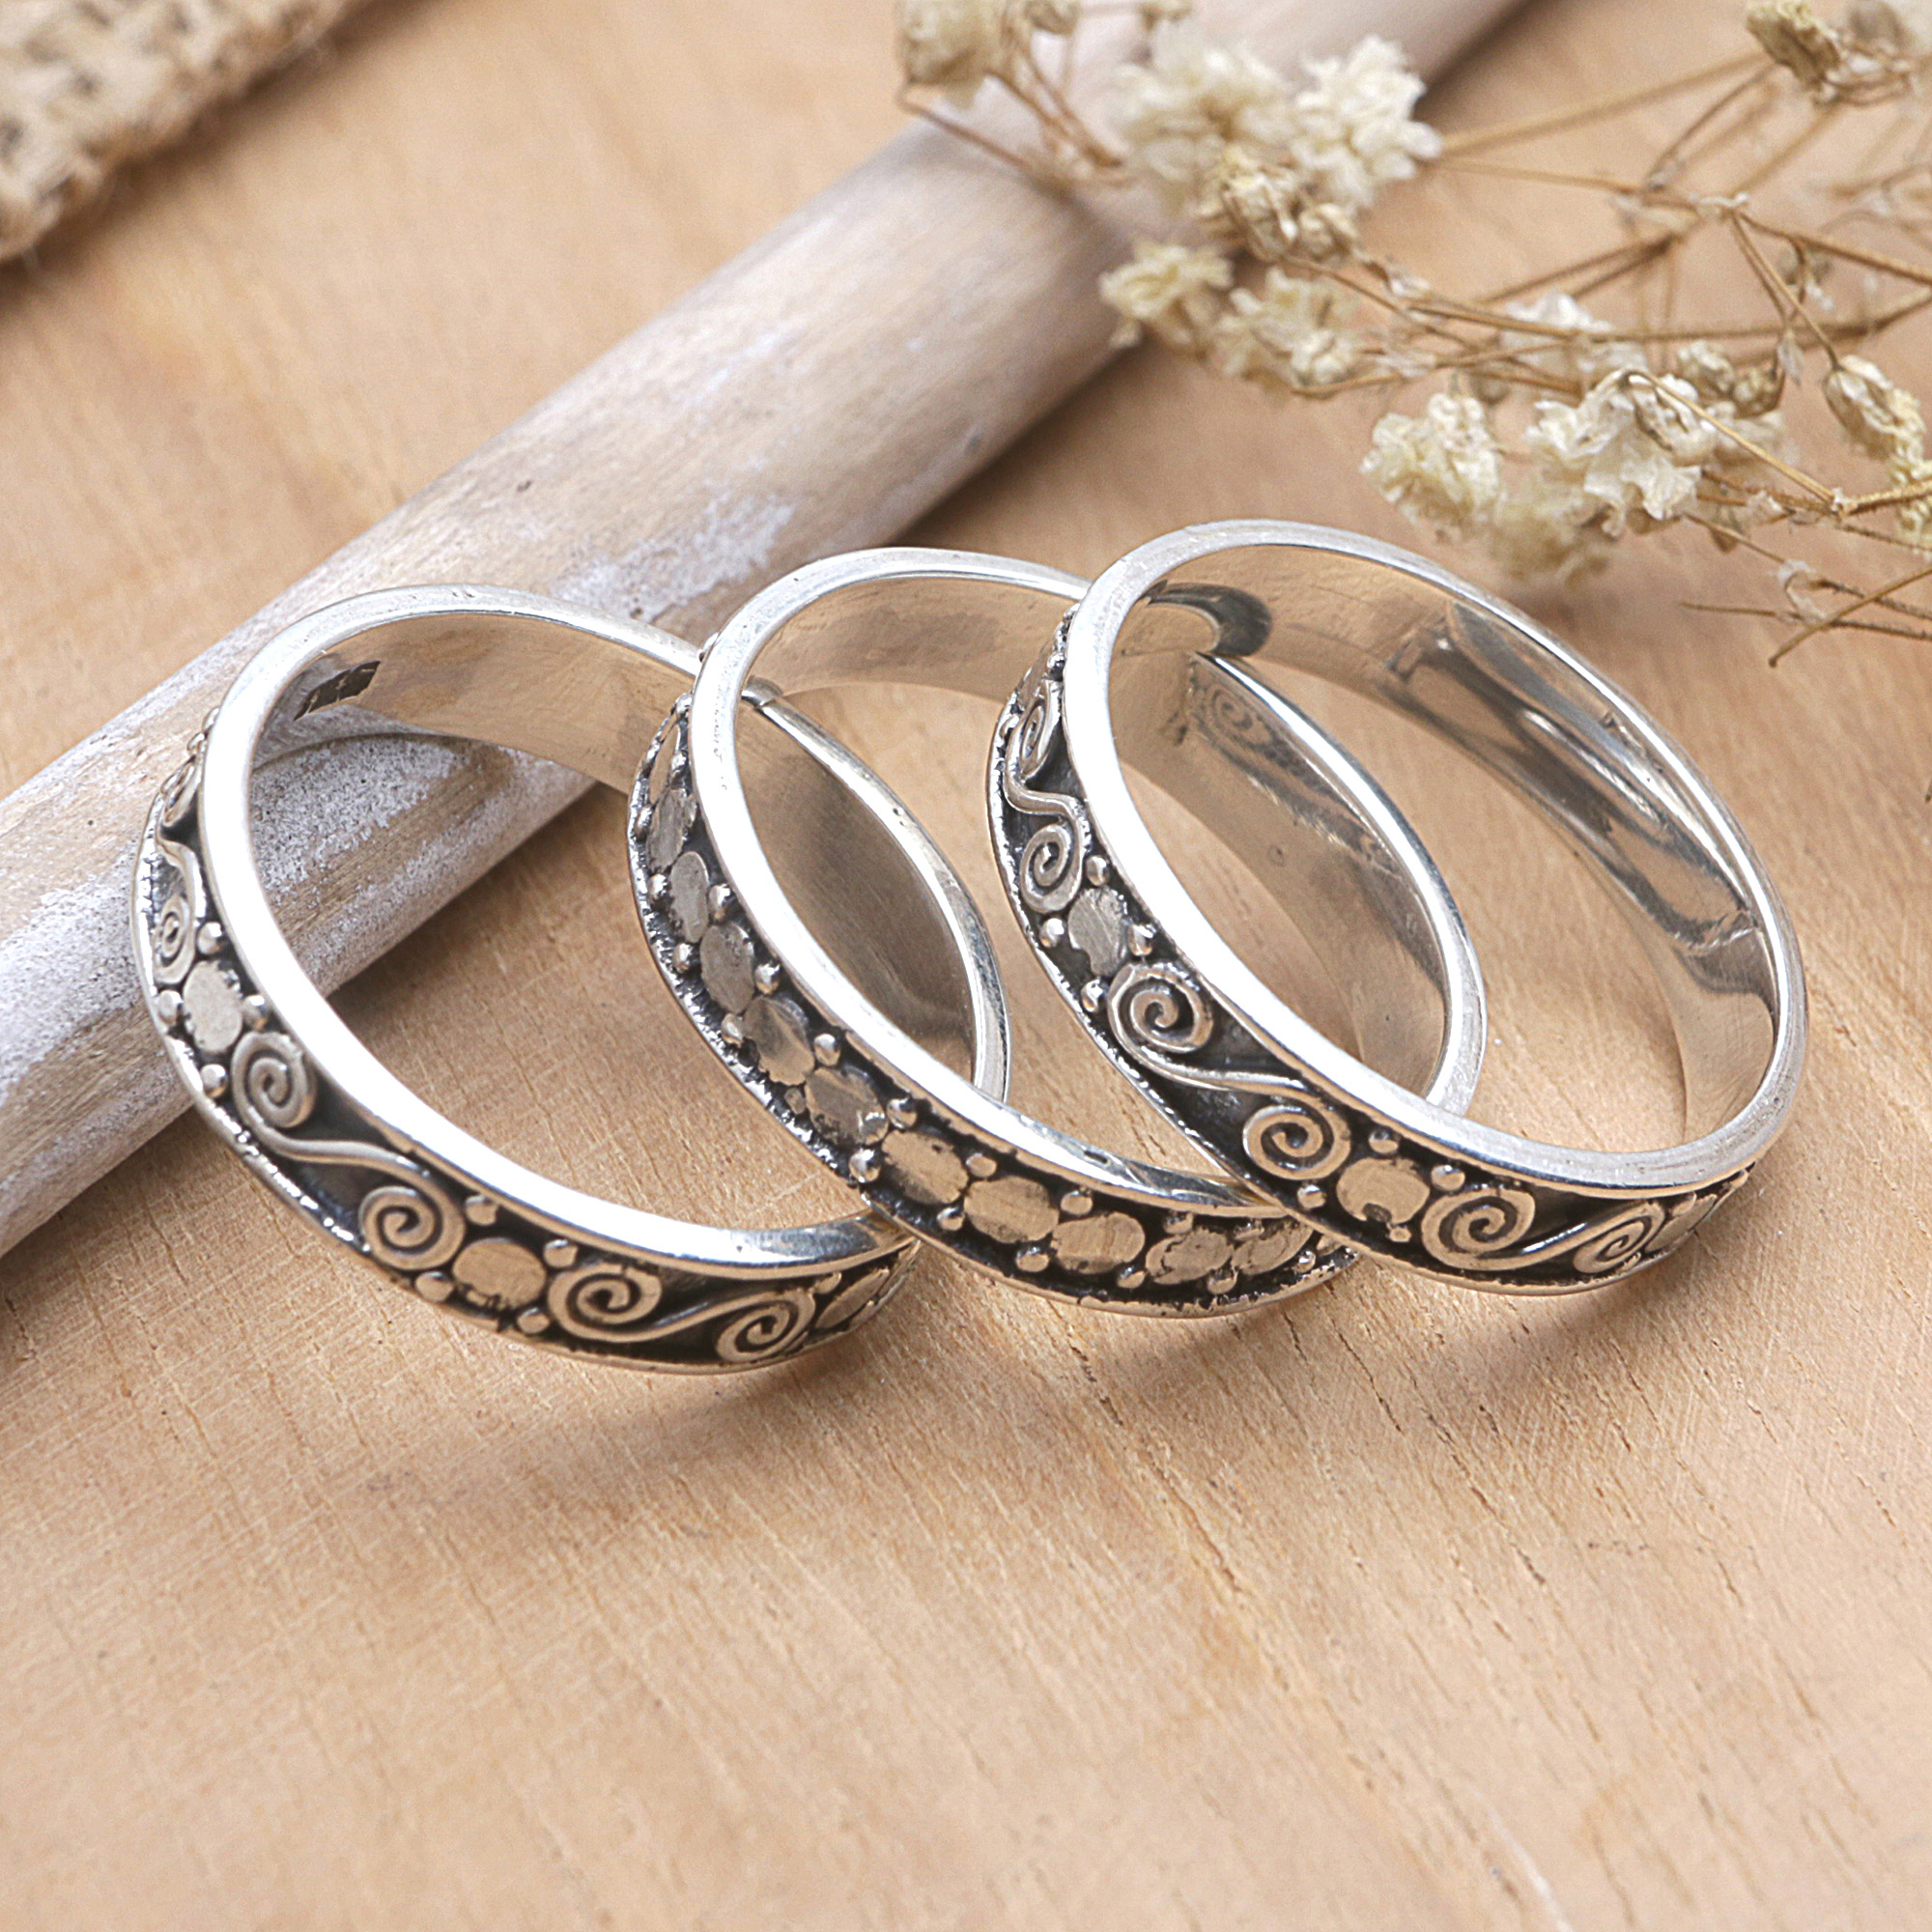 Handmade Sterling Silver Stacking Rings 